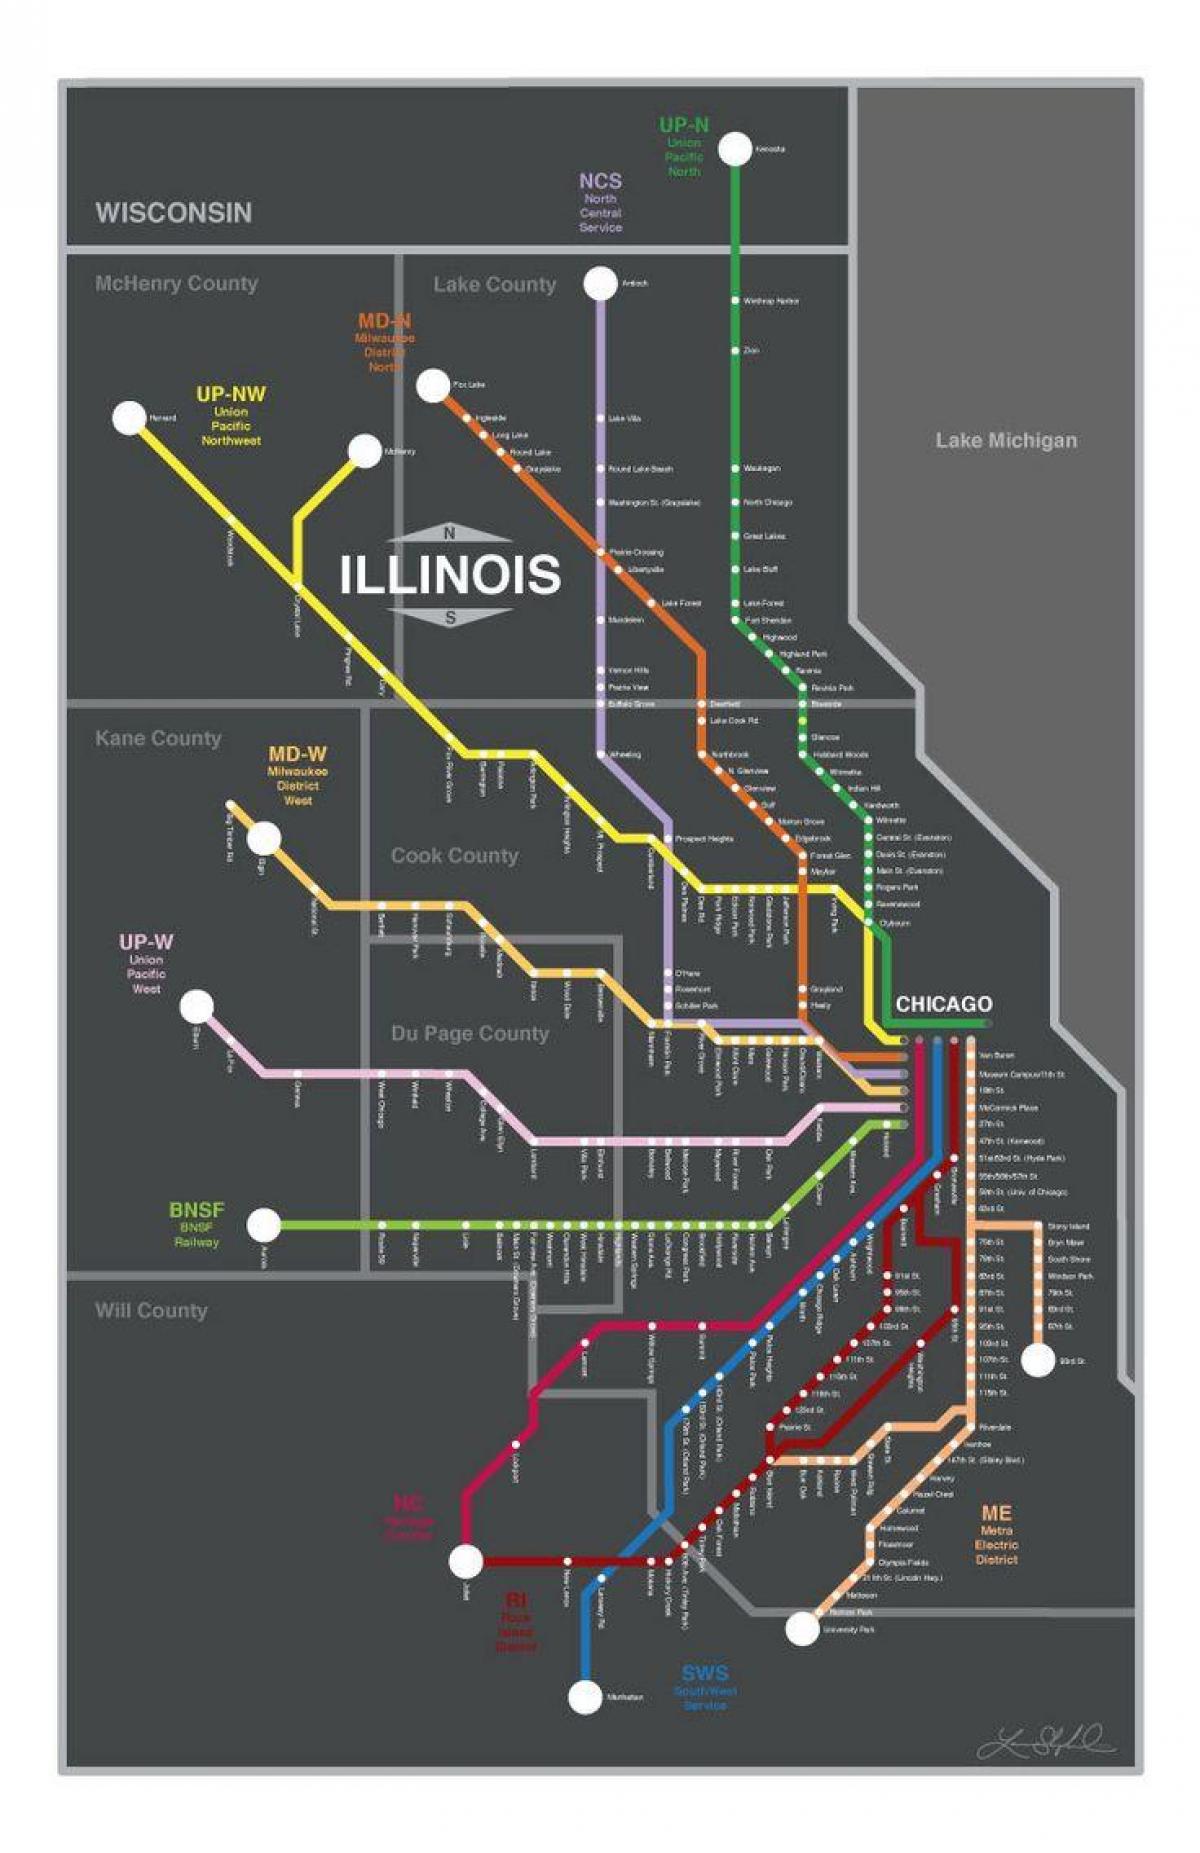 metra peta kereta Chicago